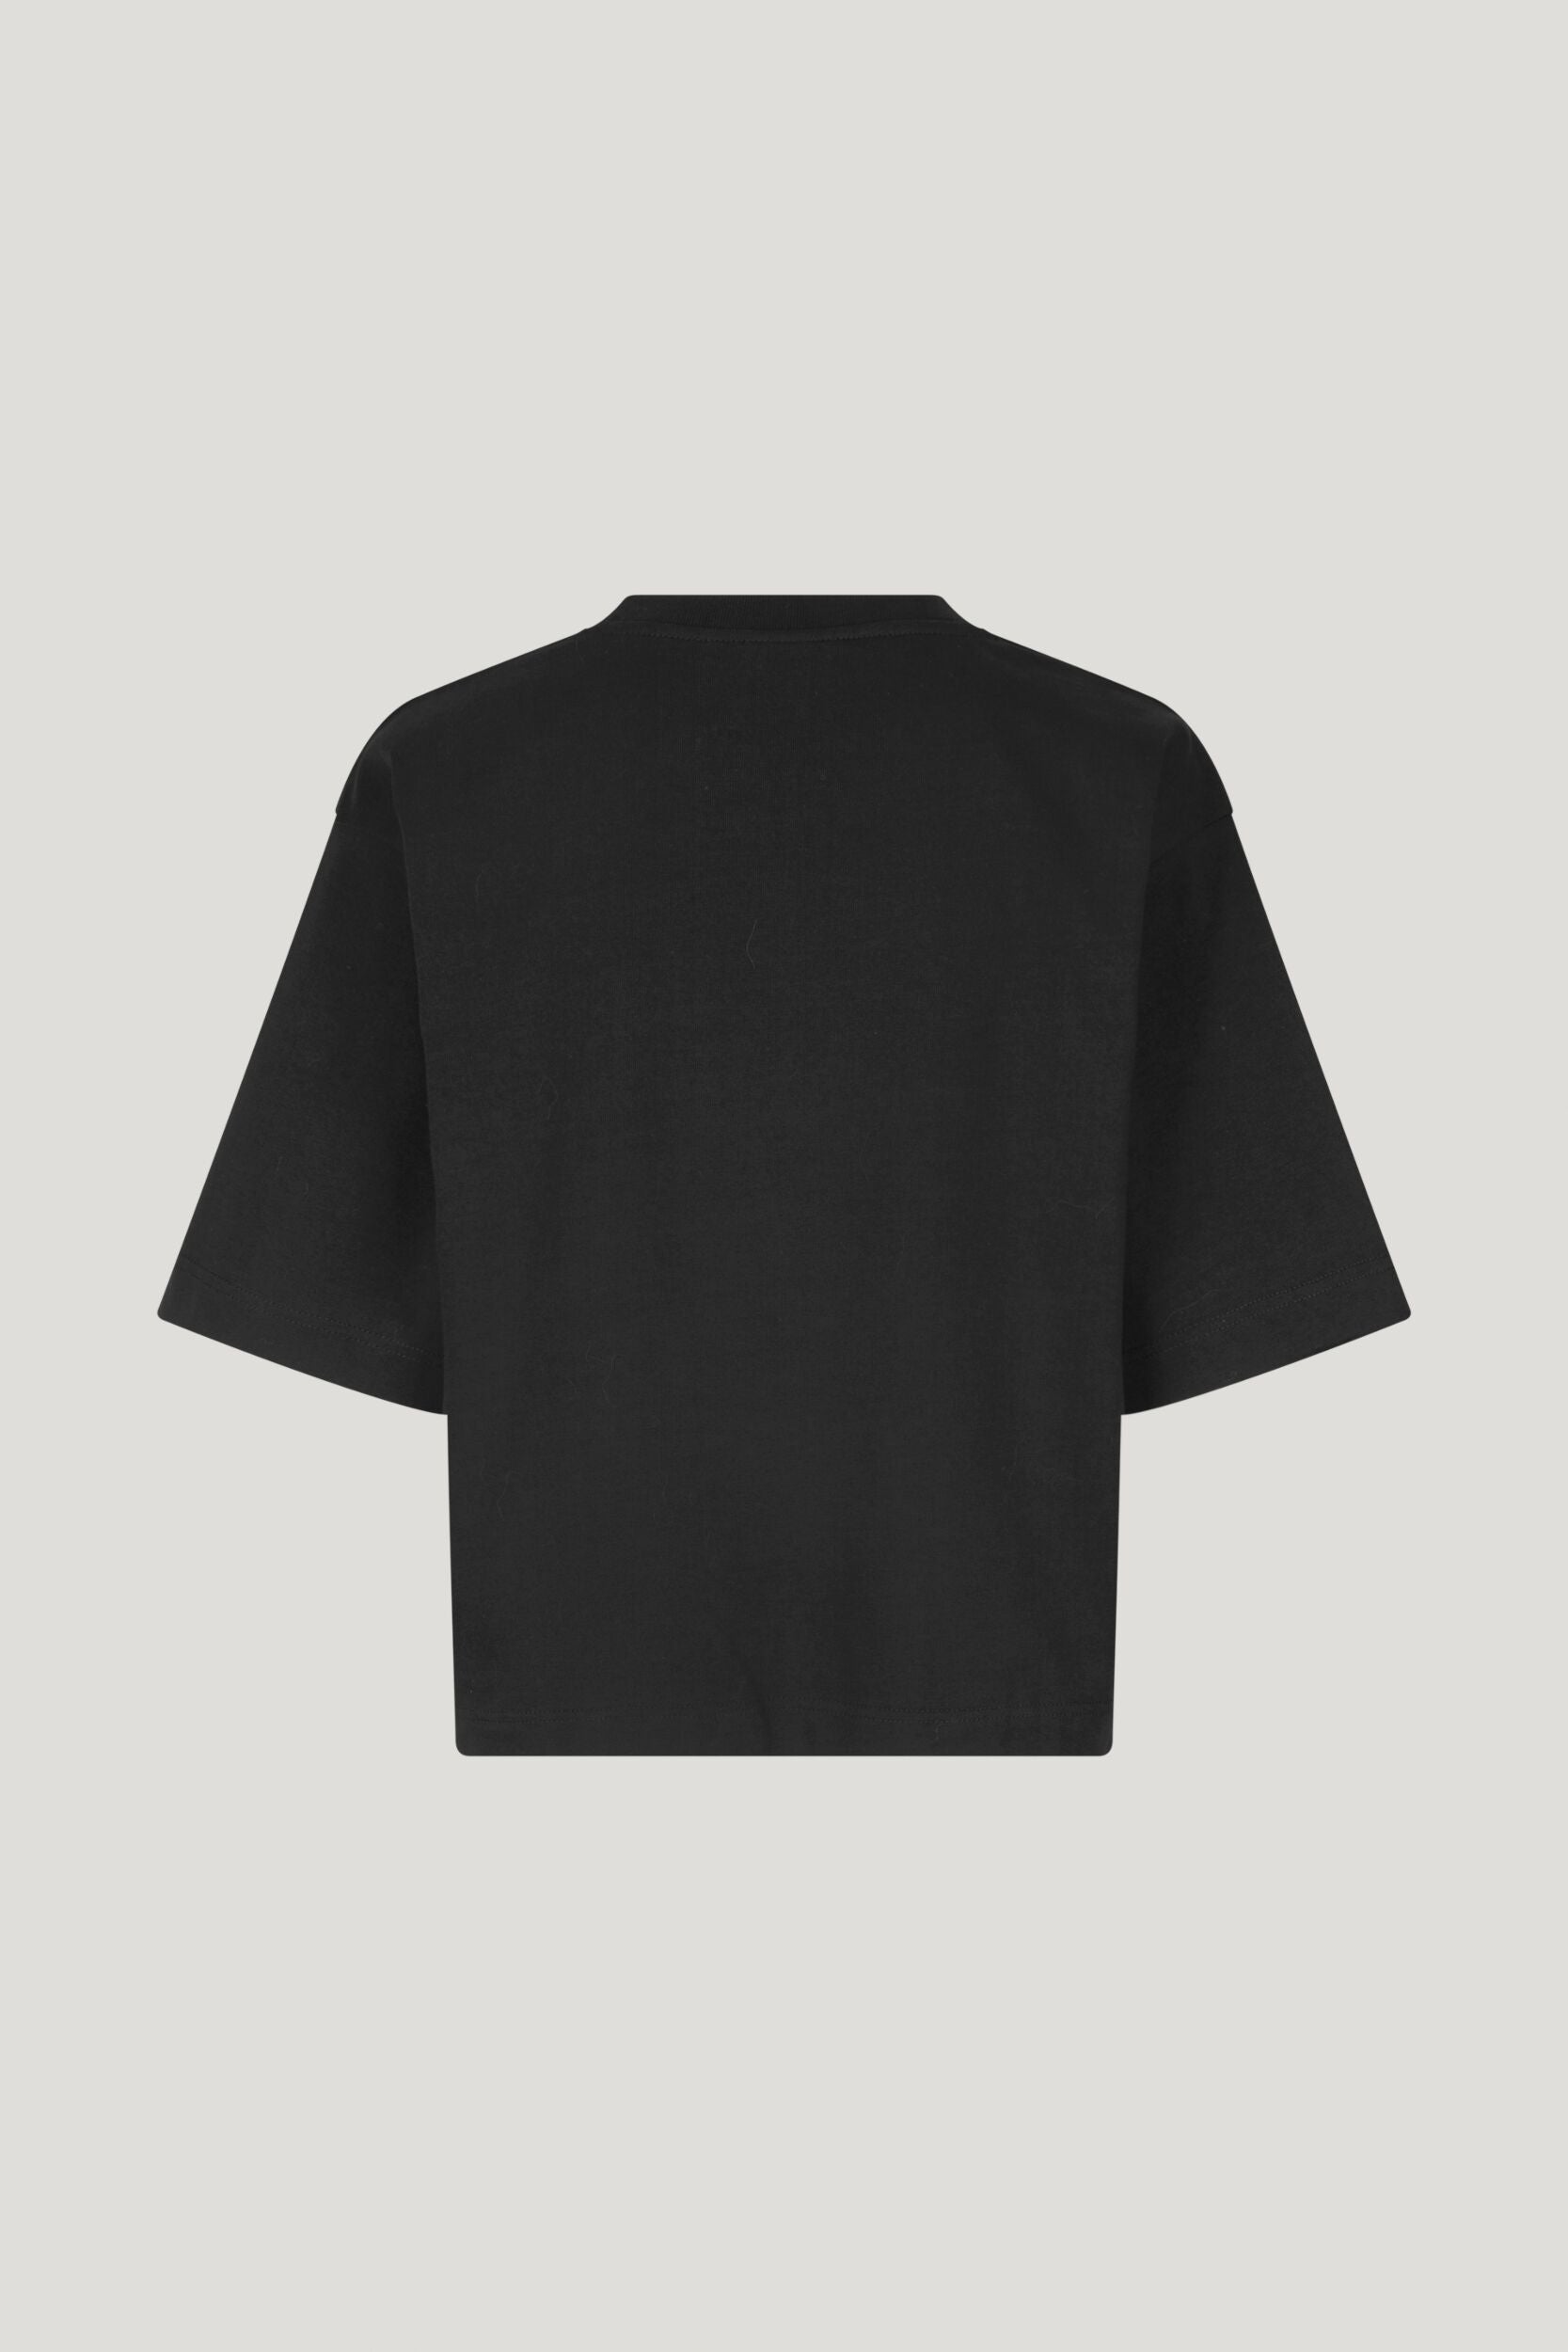 Baum - Jian T-Shirt